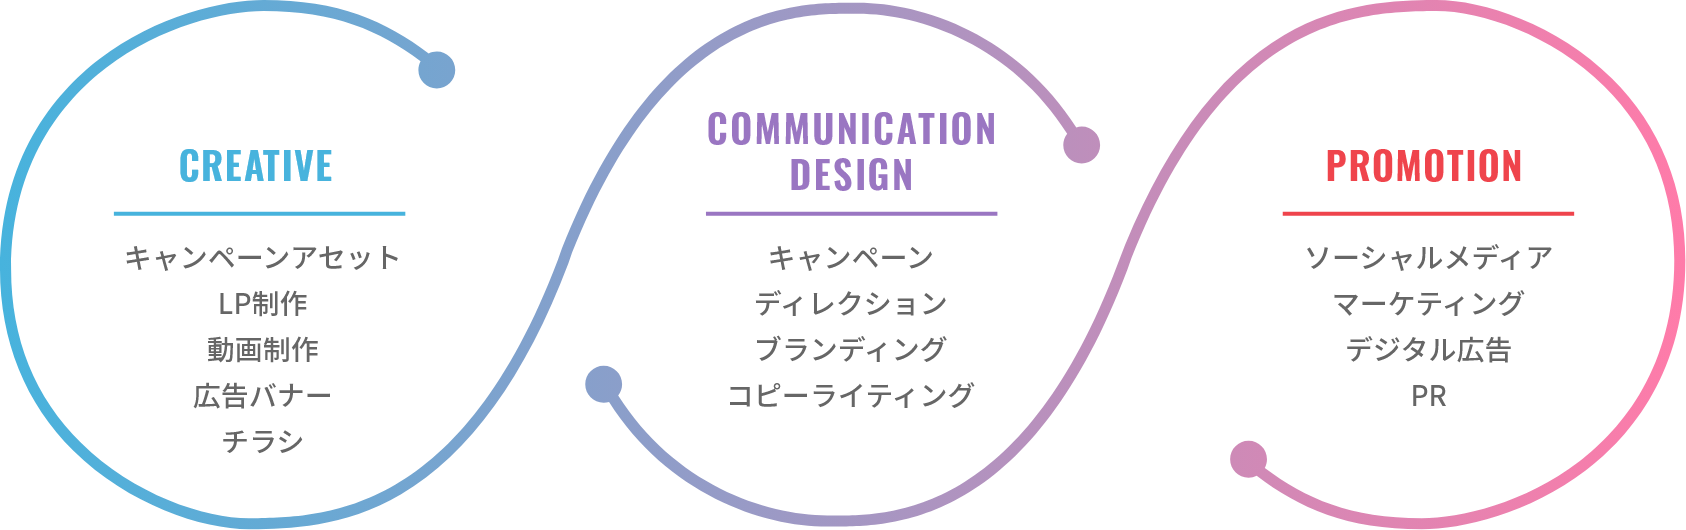 CREATIVE & COMMUNICATION DESIGN & PROMOTION